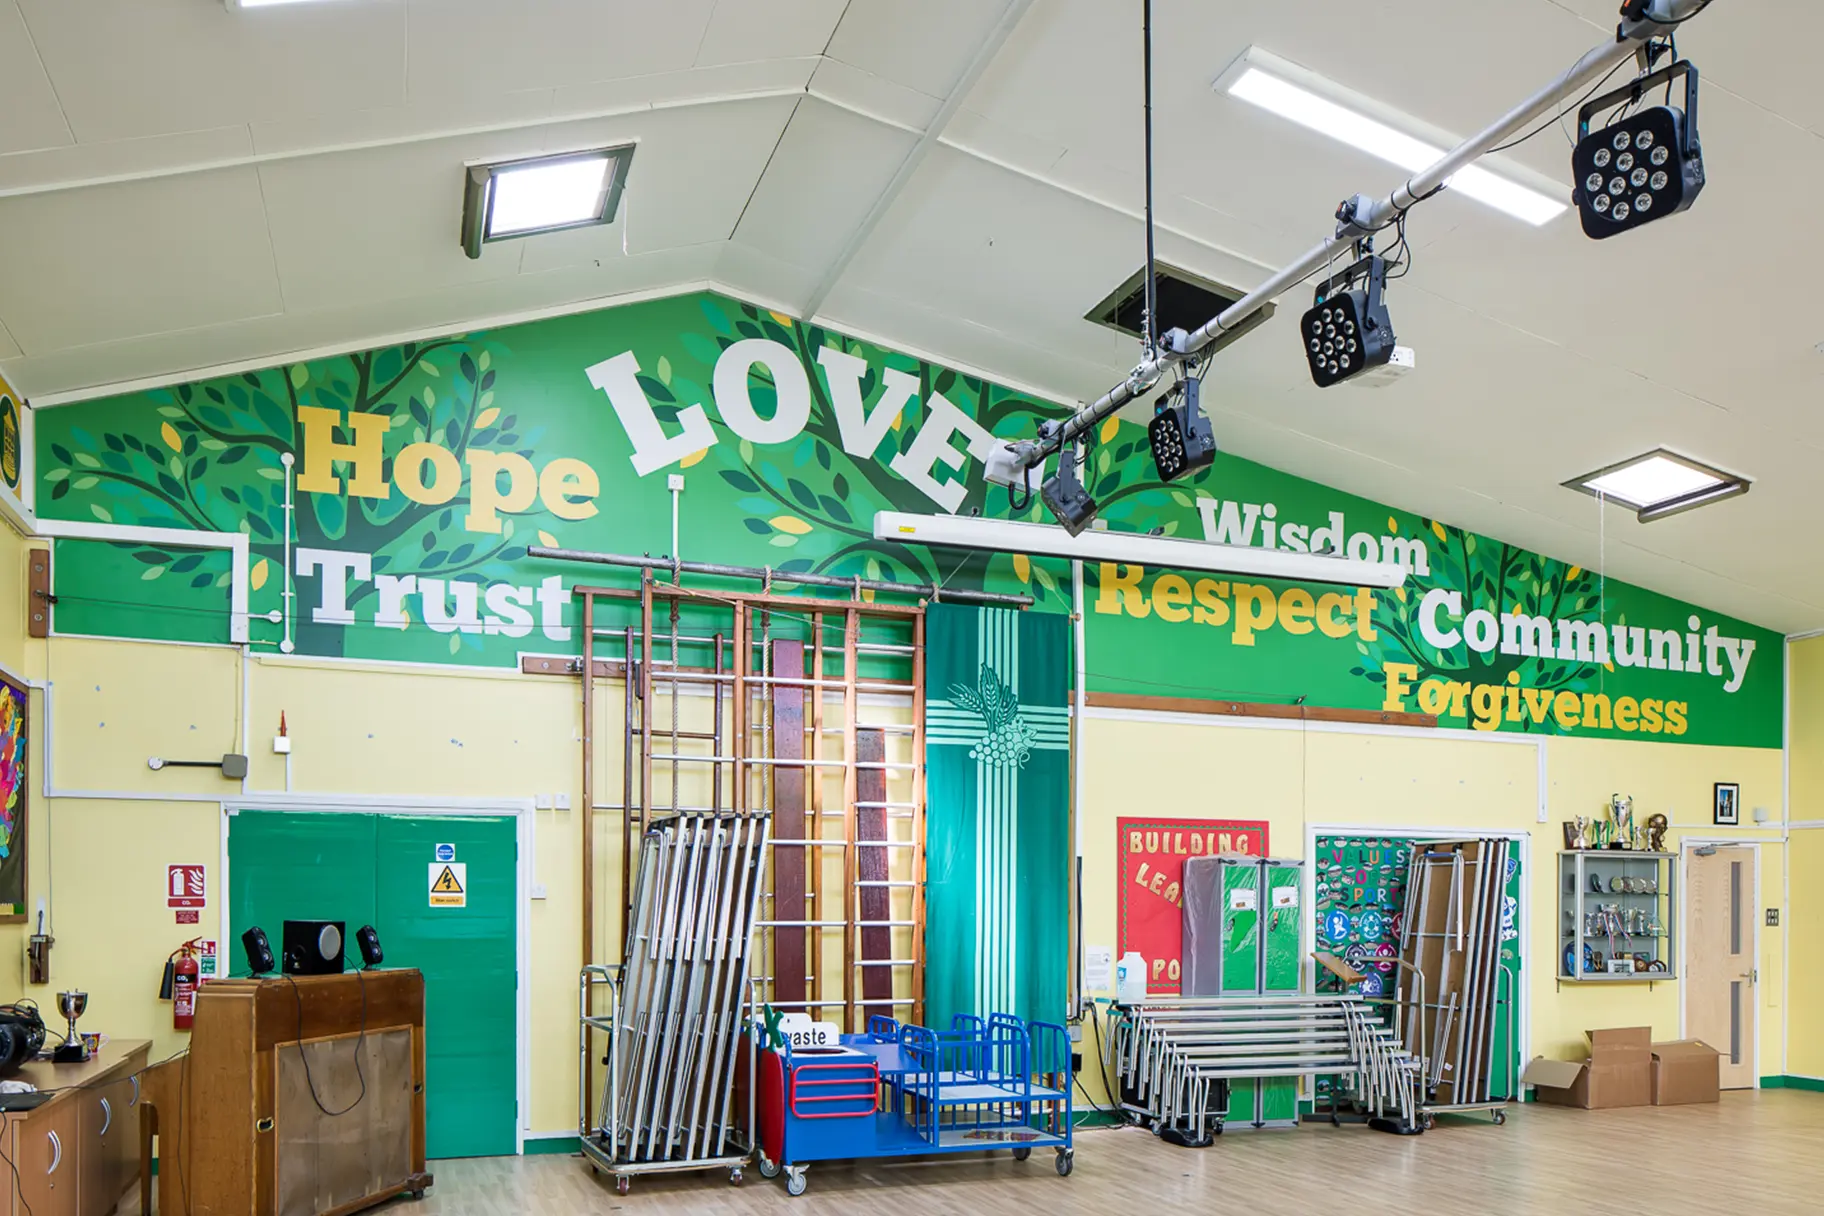 St Marys community values school hall wall art